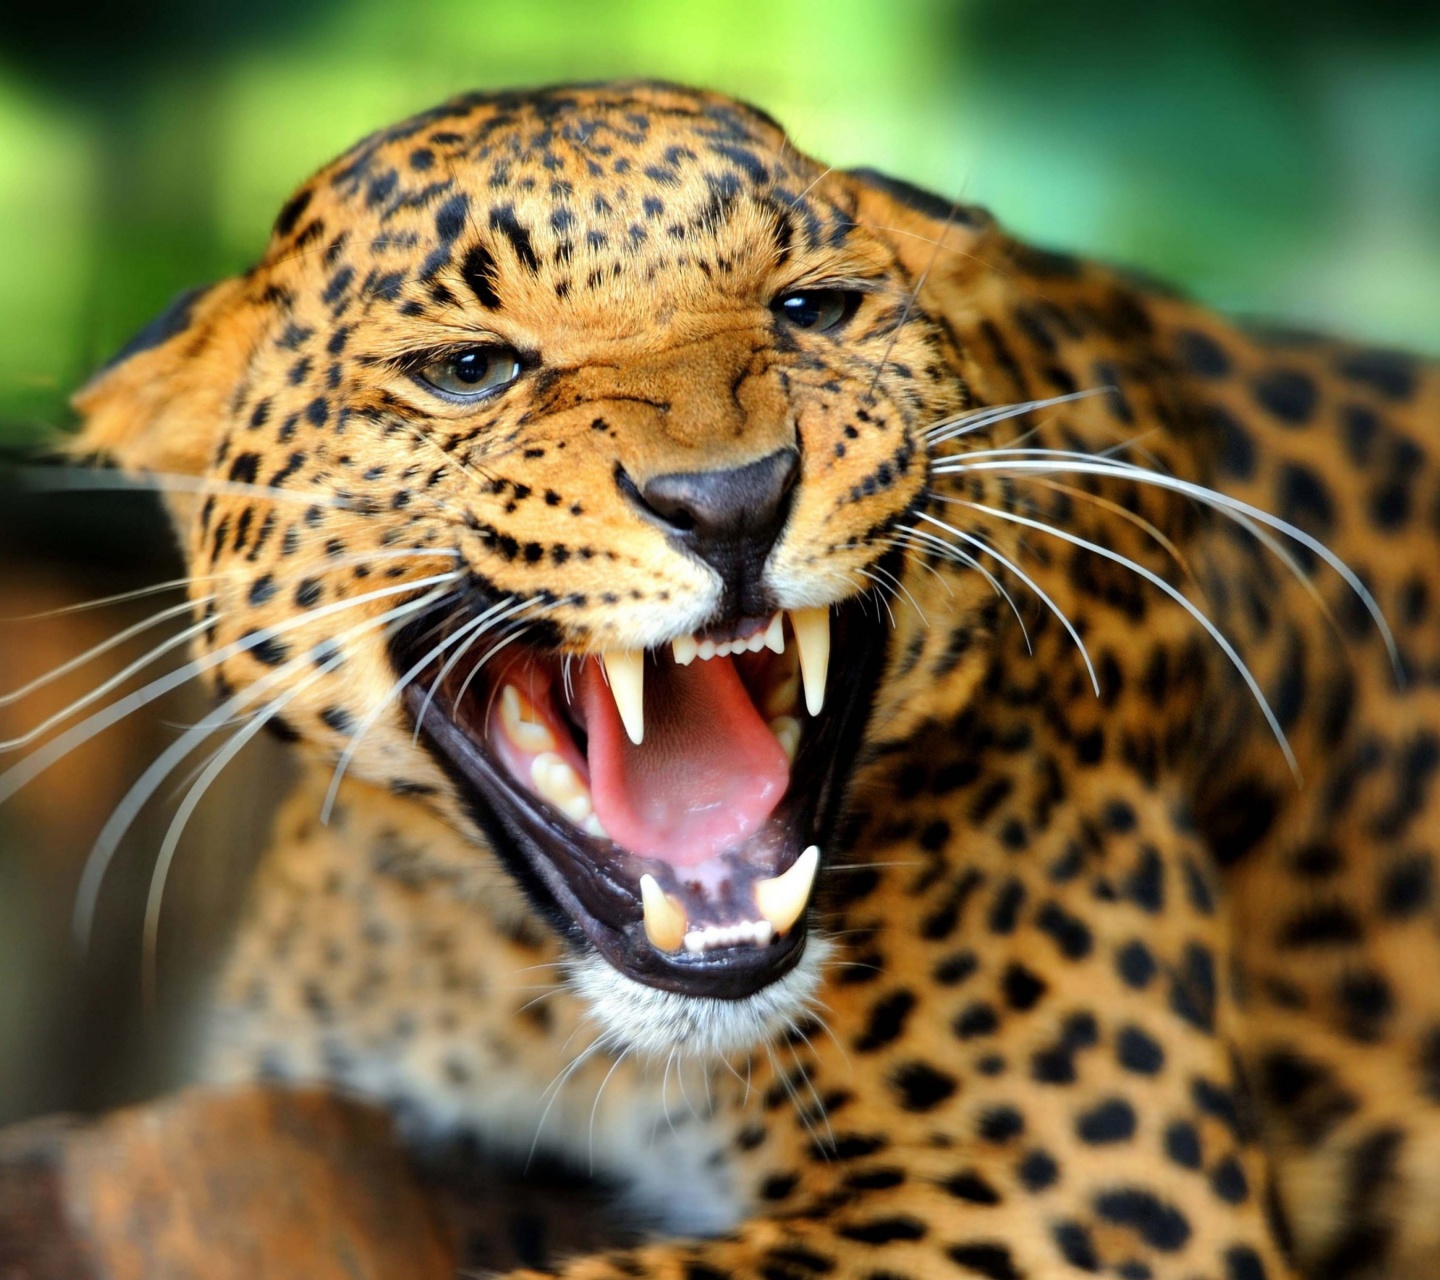 Leopard Wild Cat Growl